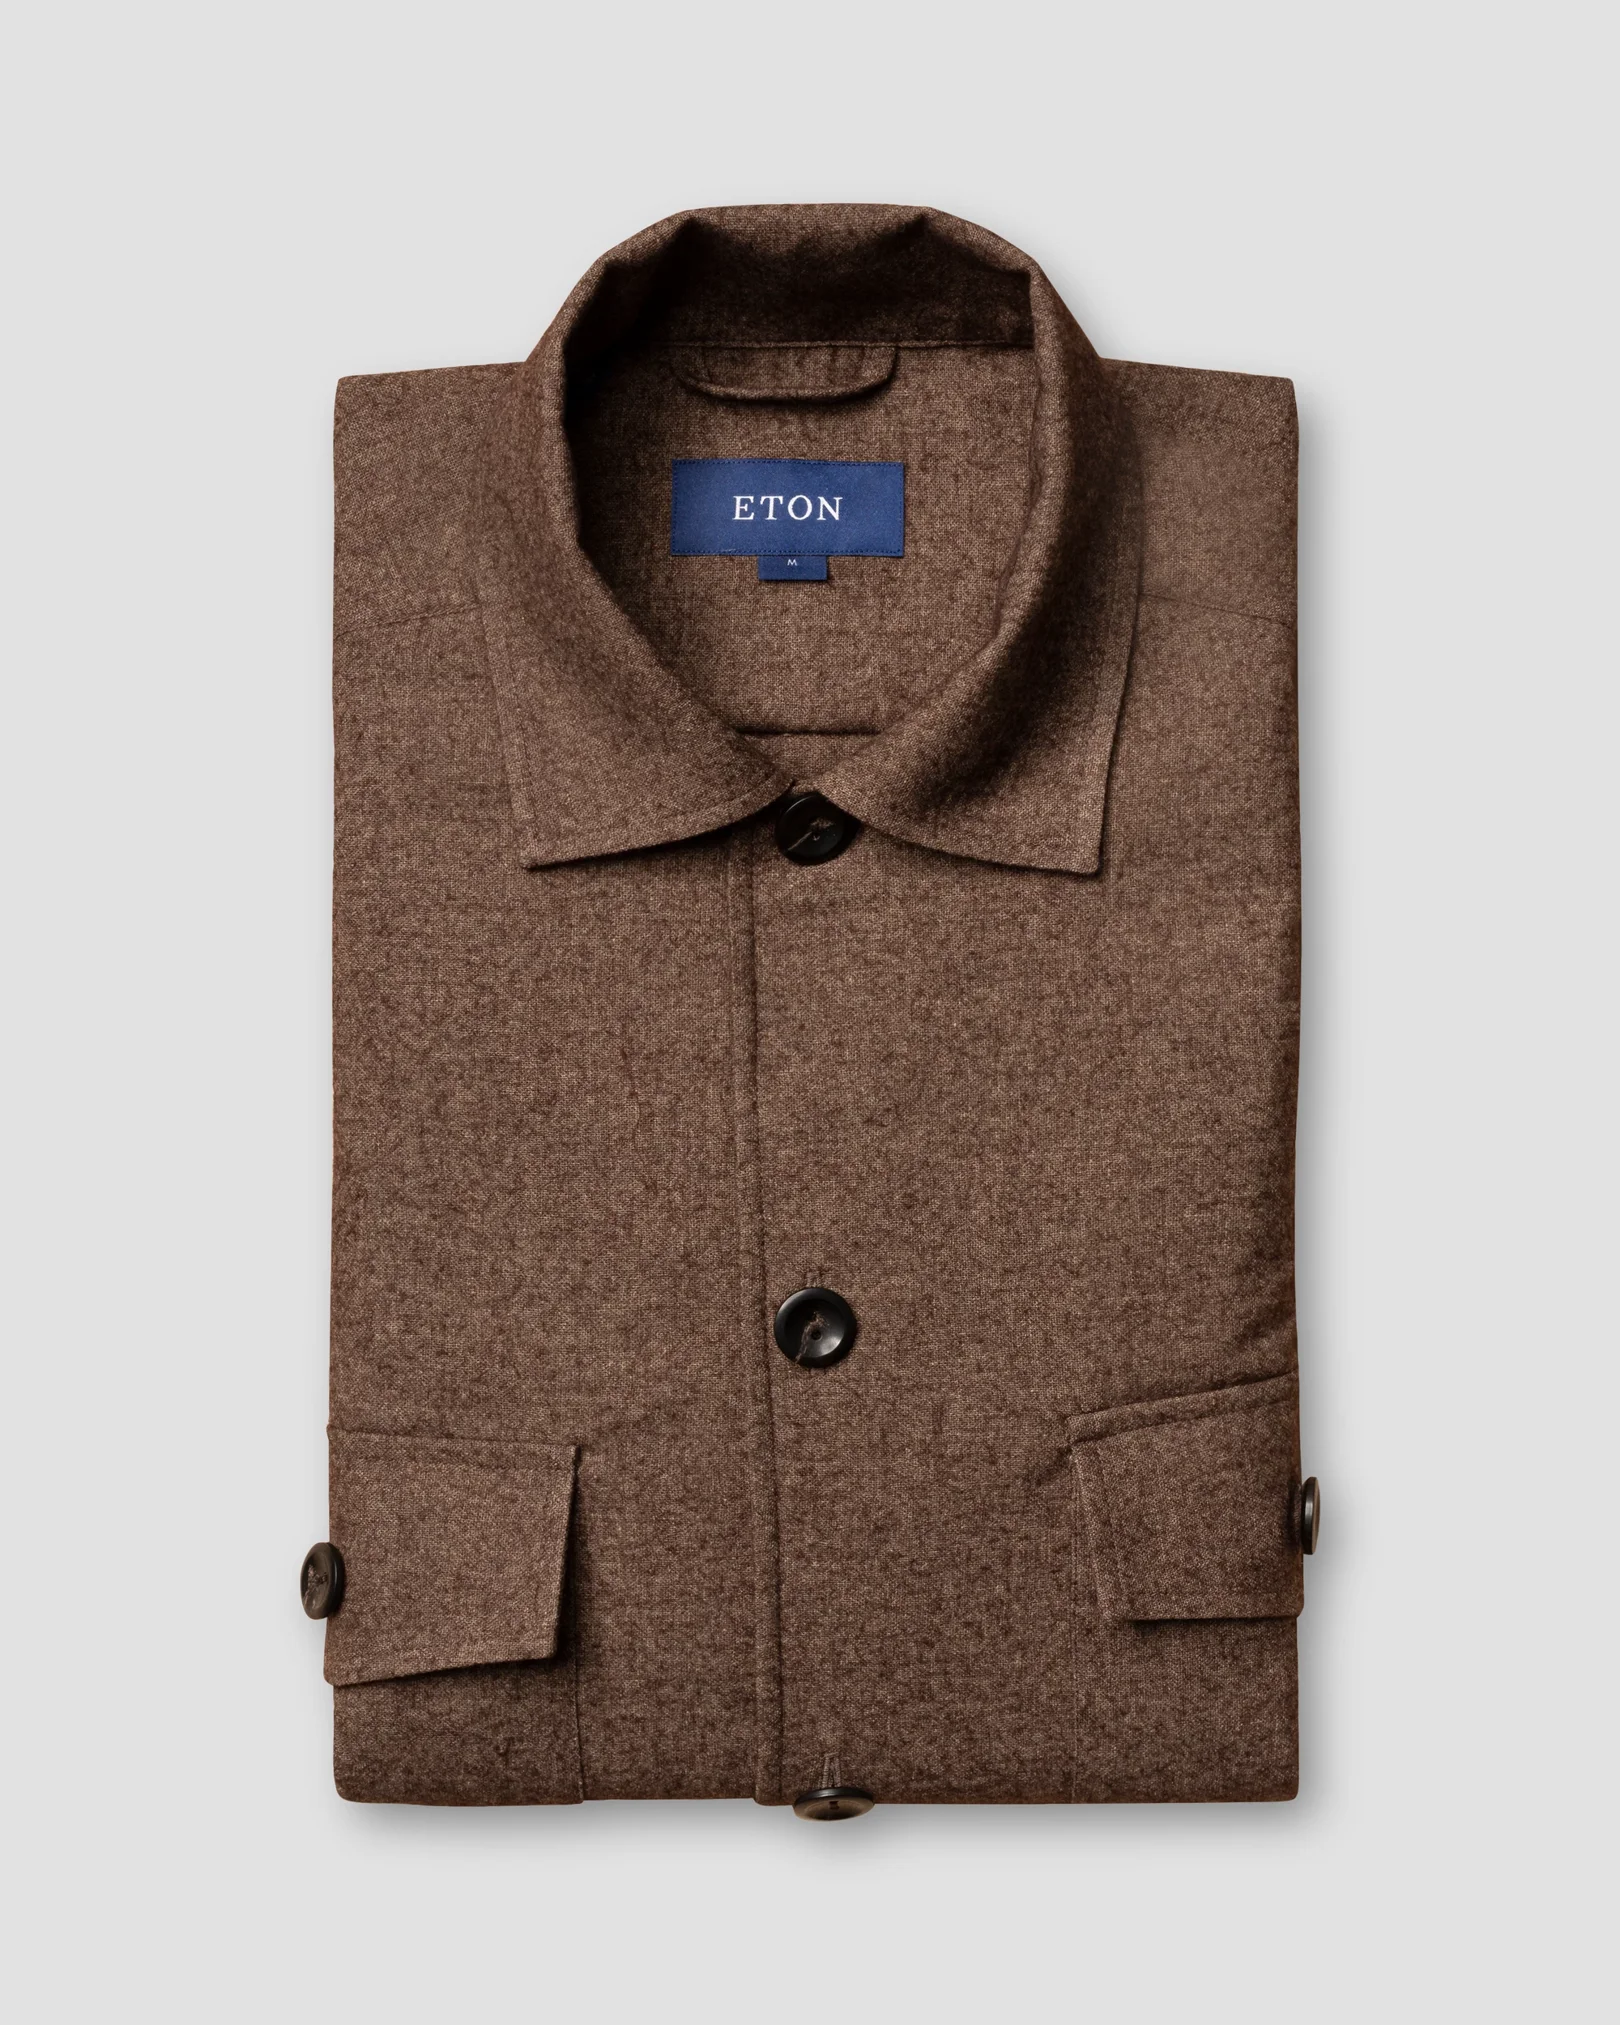 Eton - brown cotton wool cashmere overshirt turn down single cuff pointed strap regular